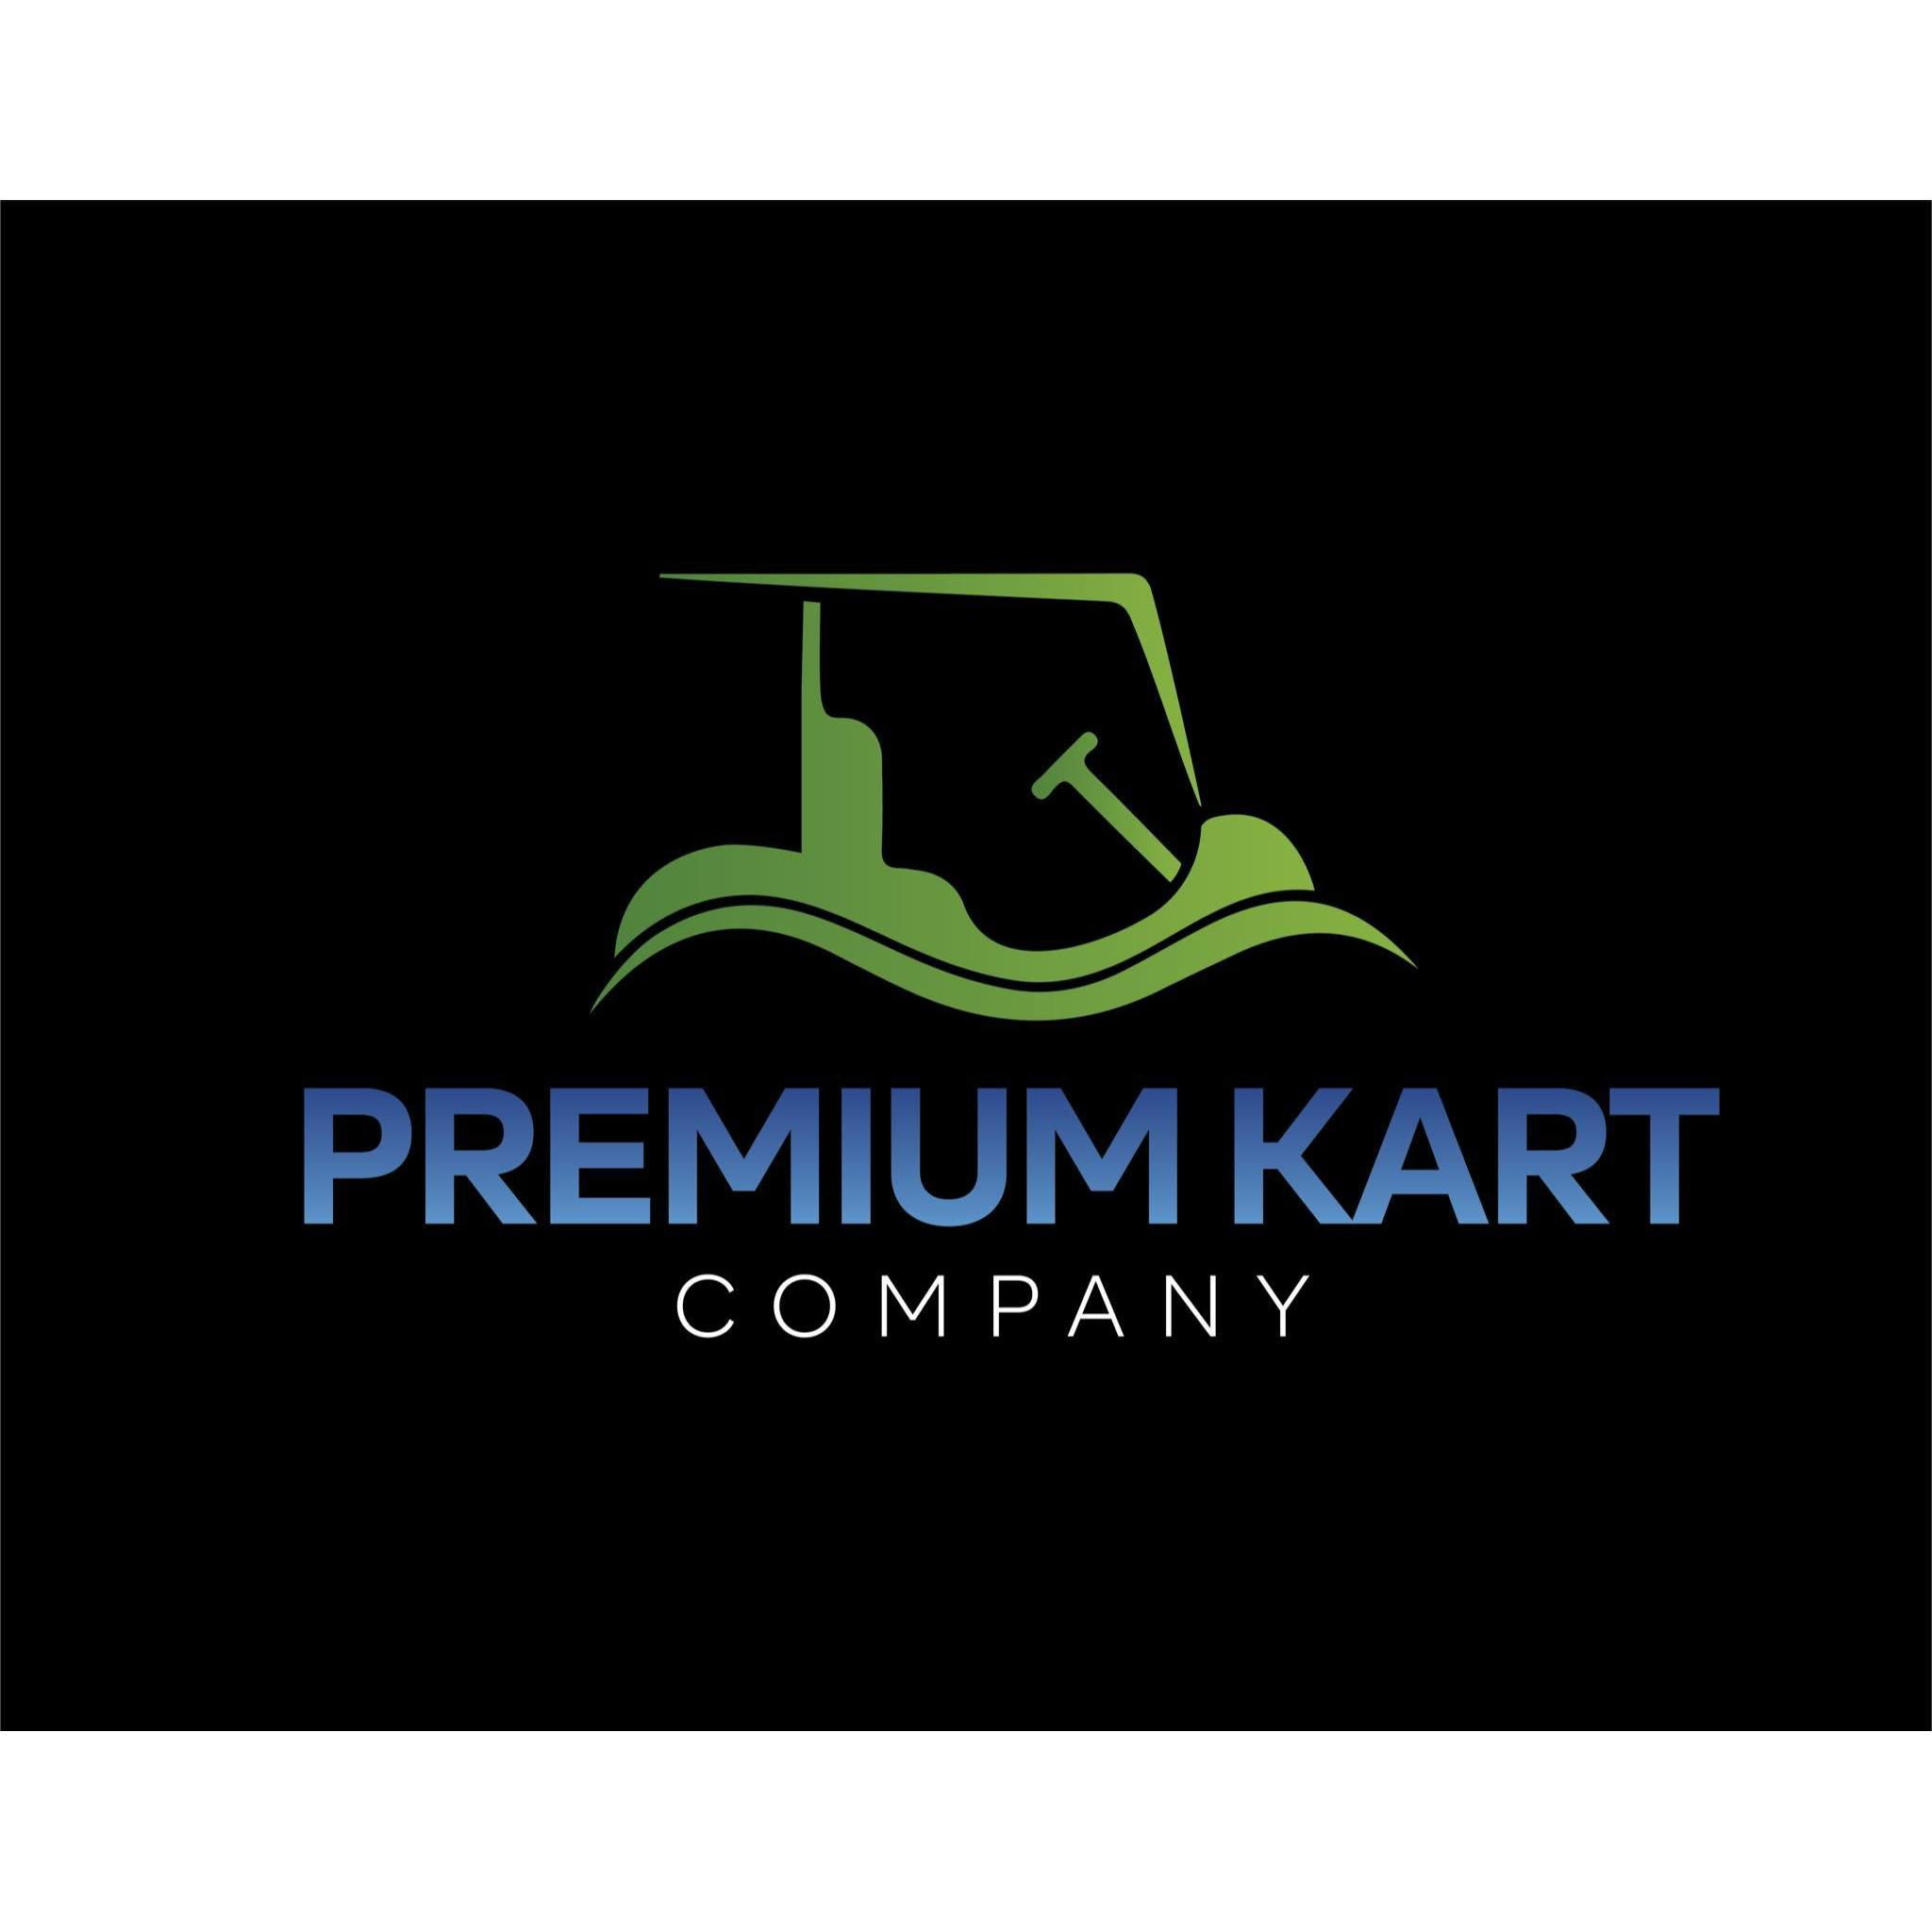 Premium Kart Company